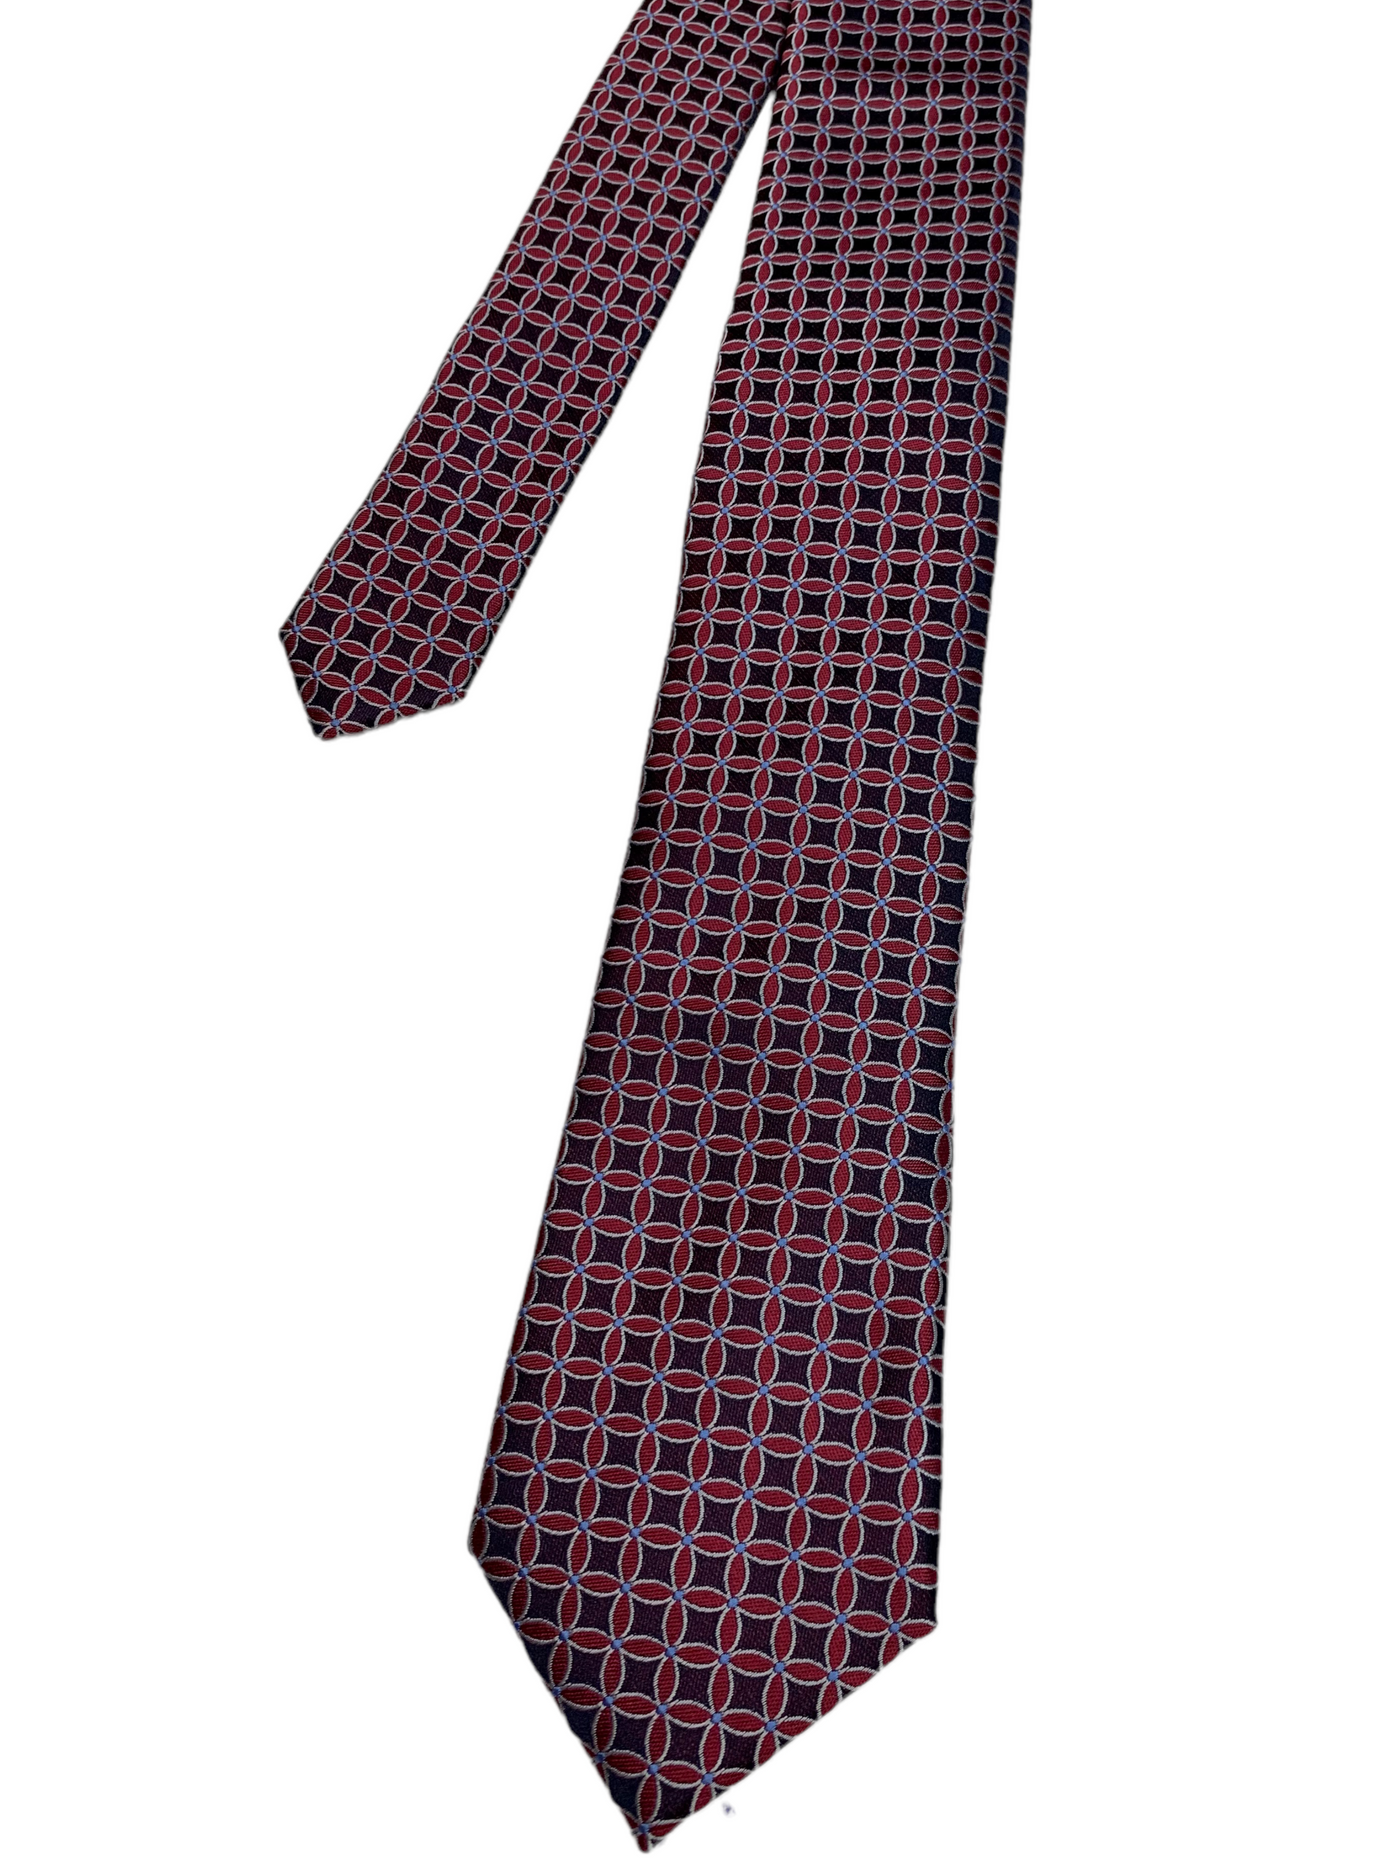 Cravate rouge à motif